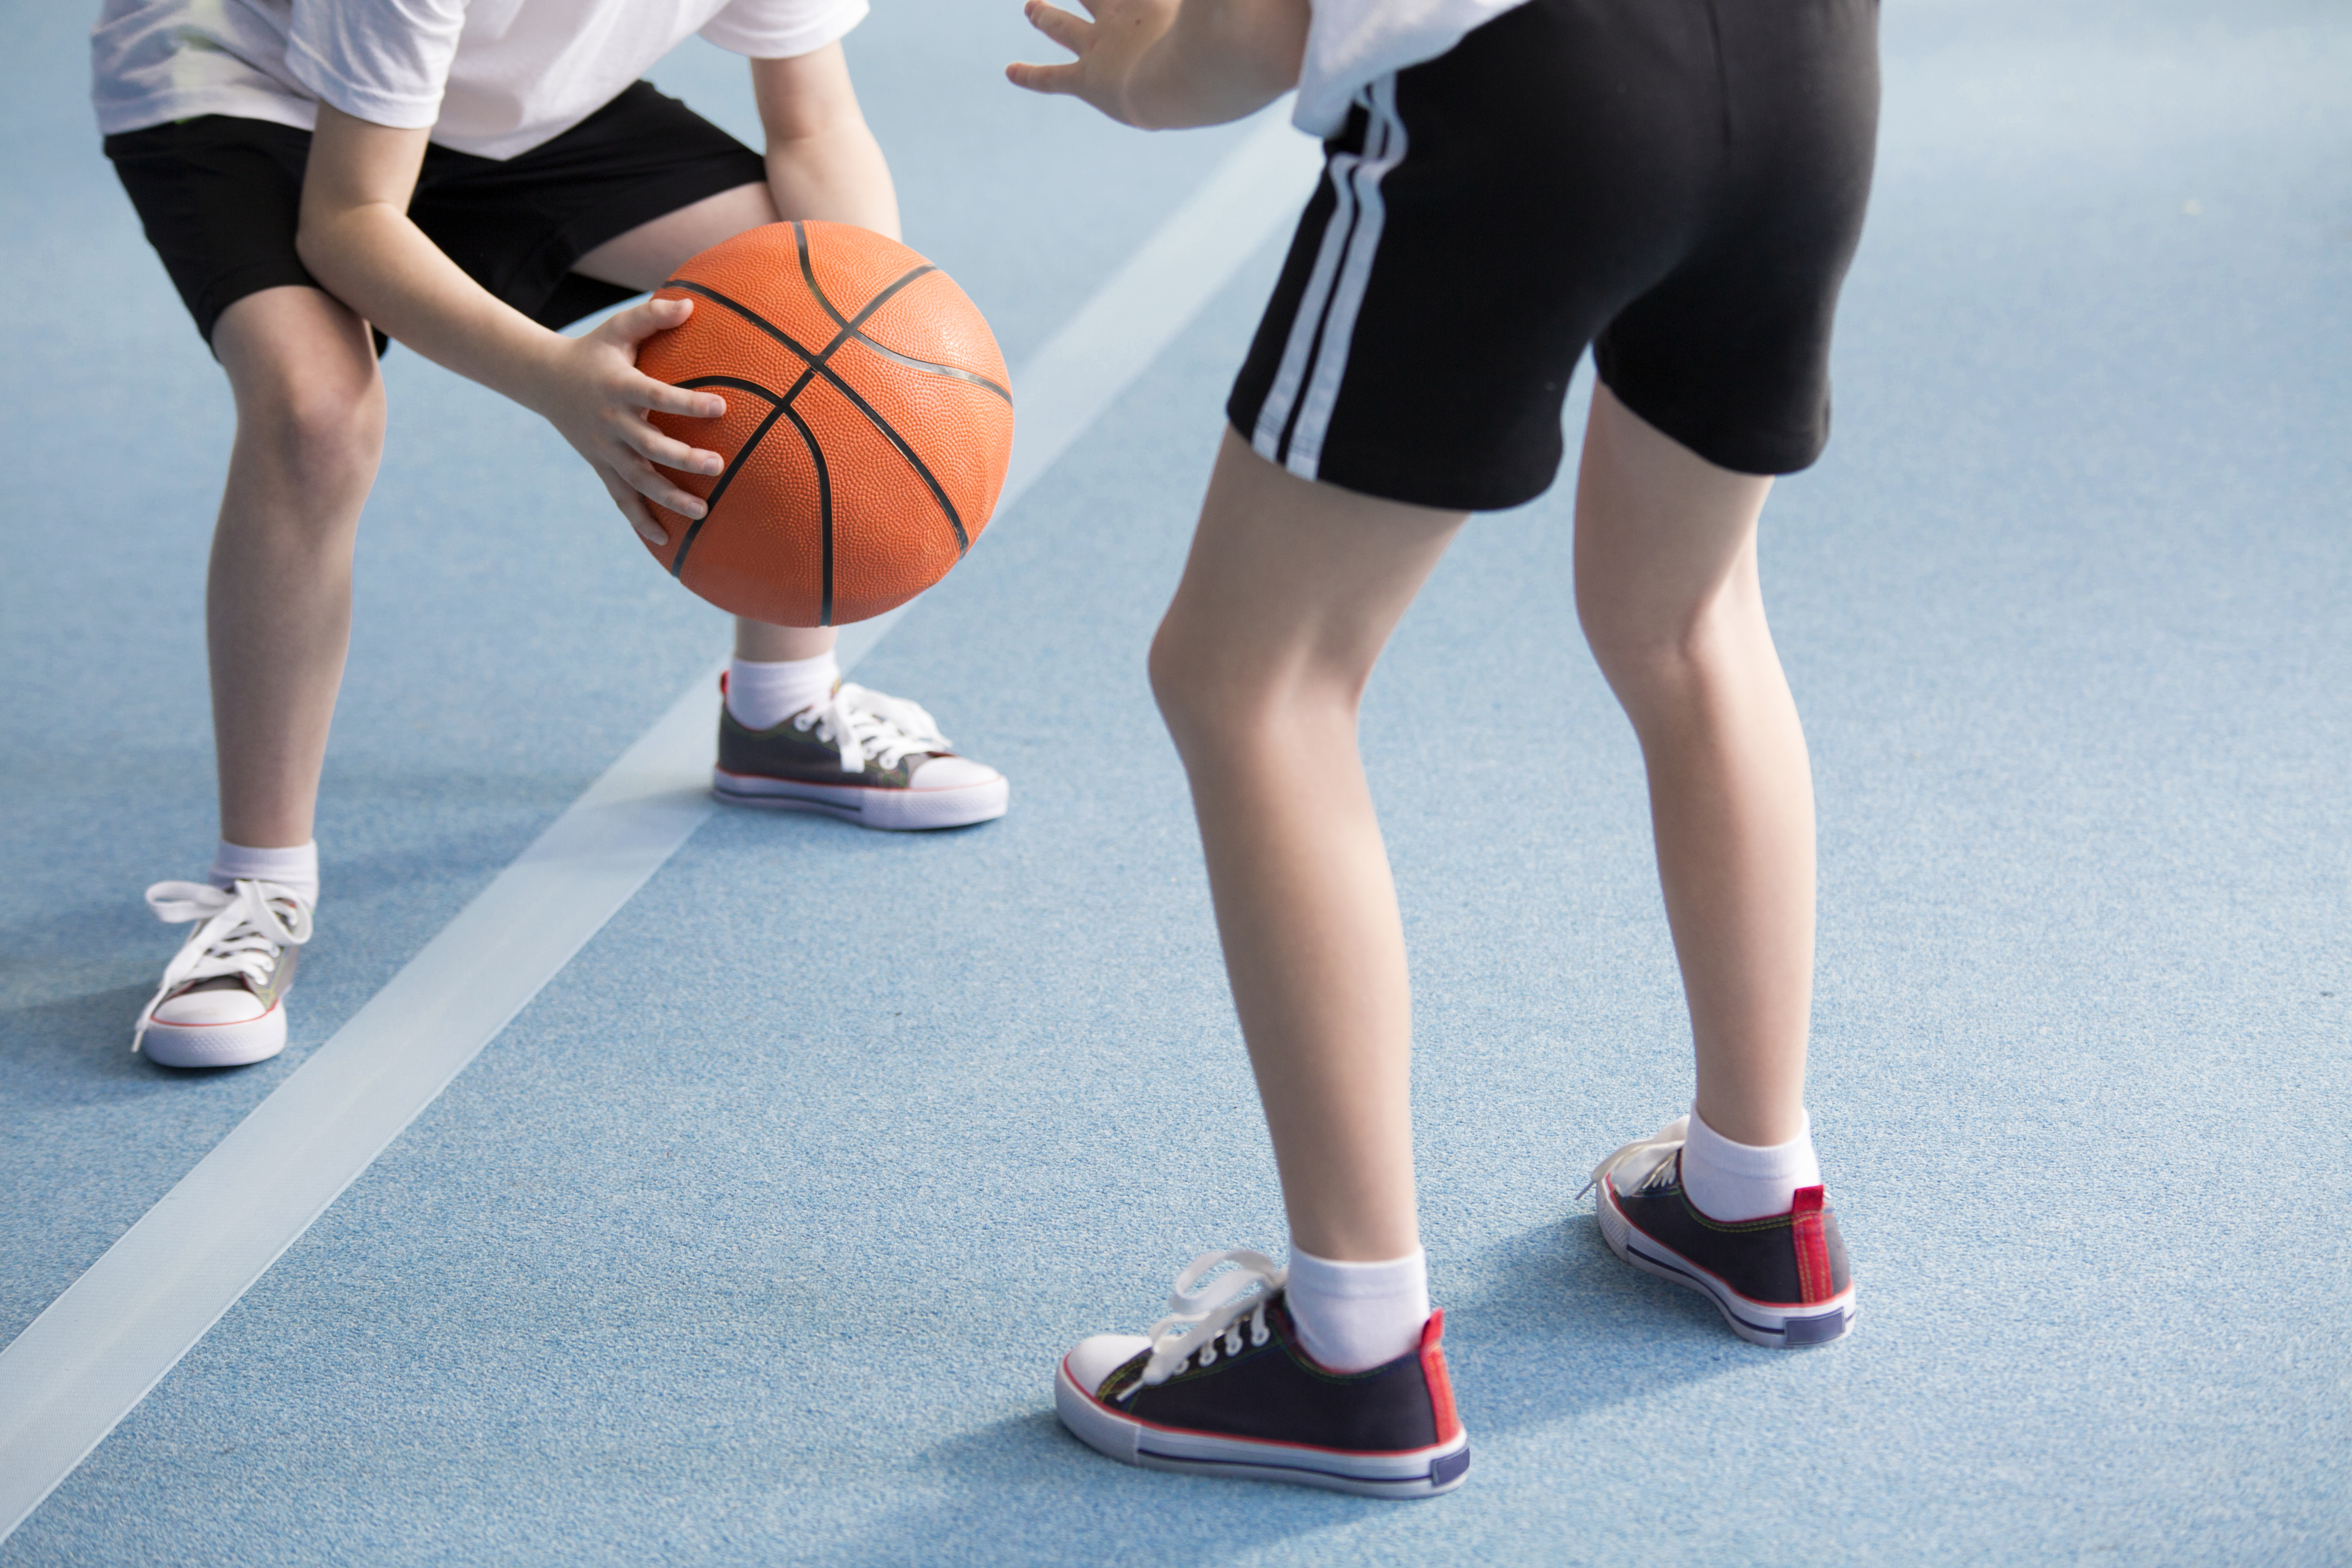 Escuela de baloncesto - Centro deportivo Amanecer